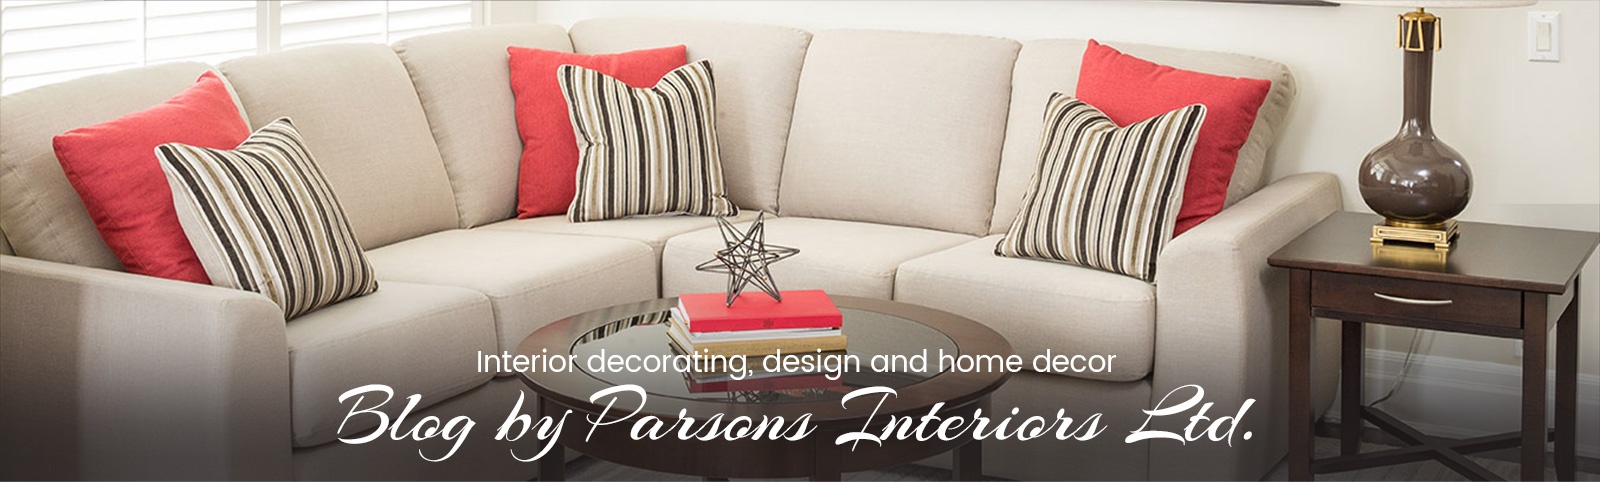 Blog by Parsons Interiors Ltd.